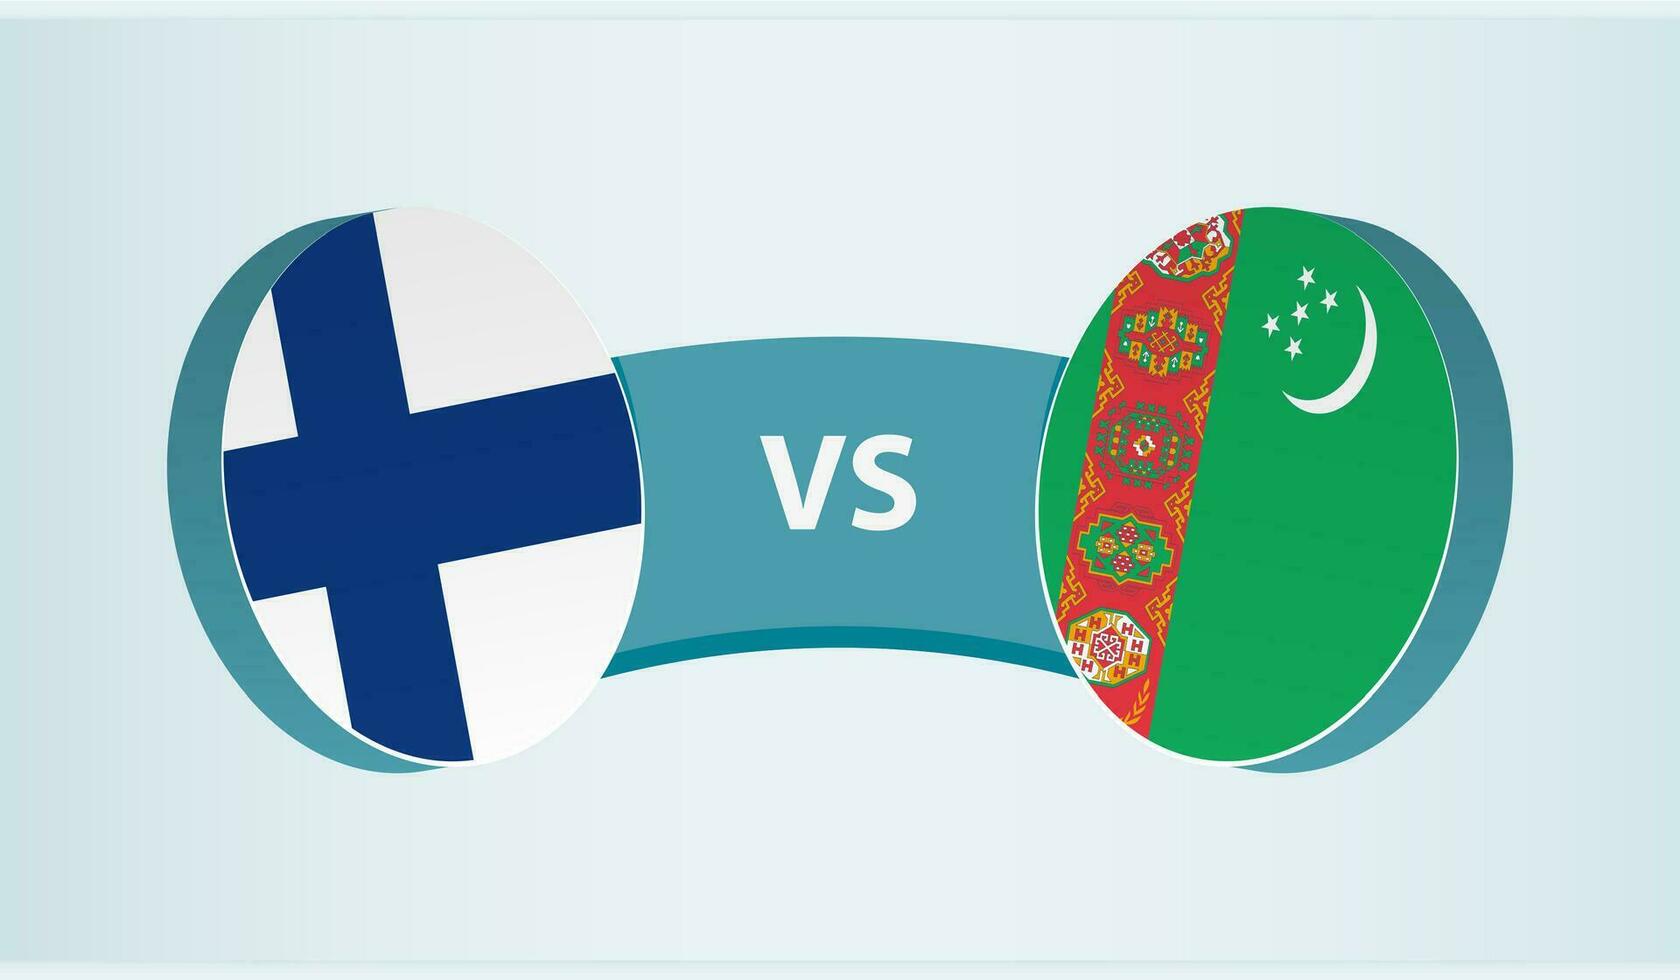 finland mot turkmenistan, team sporter konkurrens begrepp. vektor